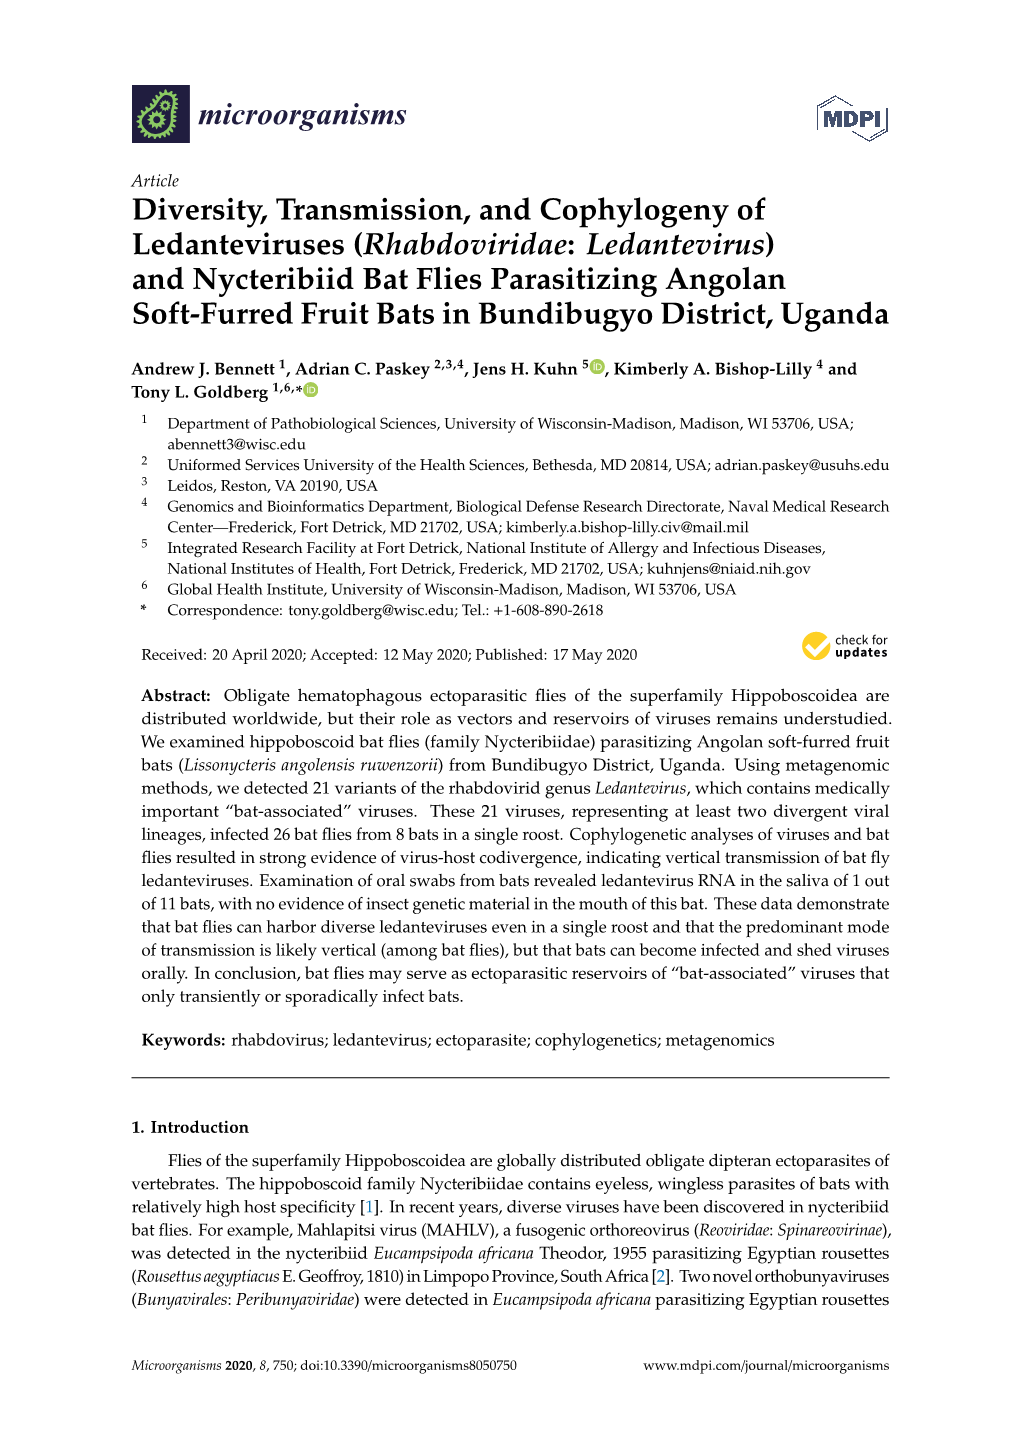 Diversity, Transmission, and Cophylogeny of Ledanteviruses